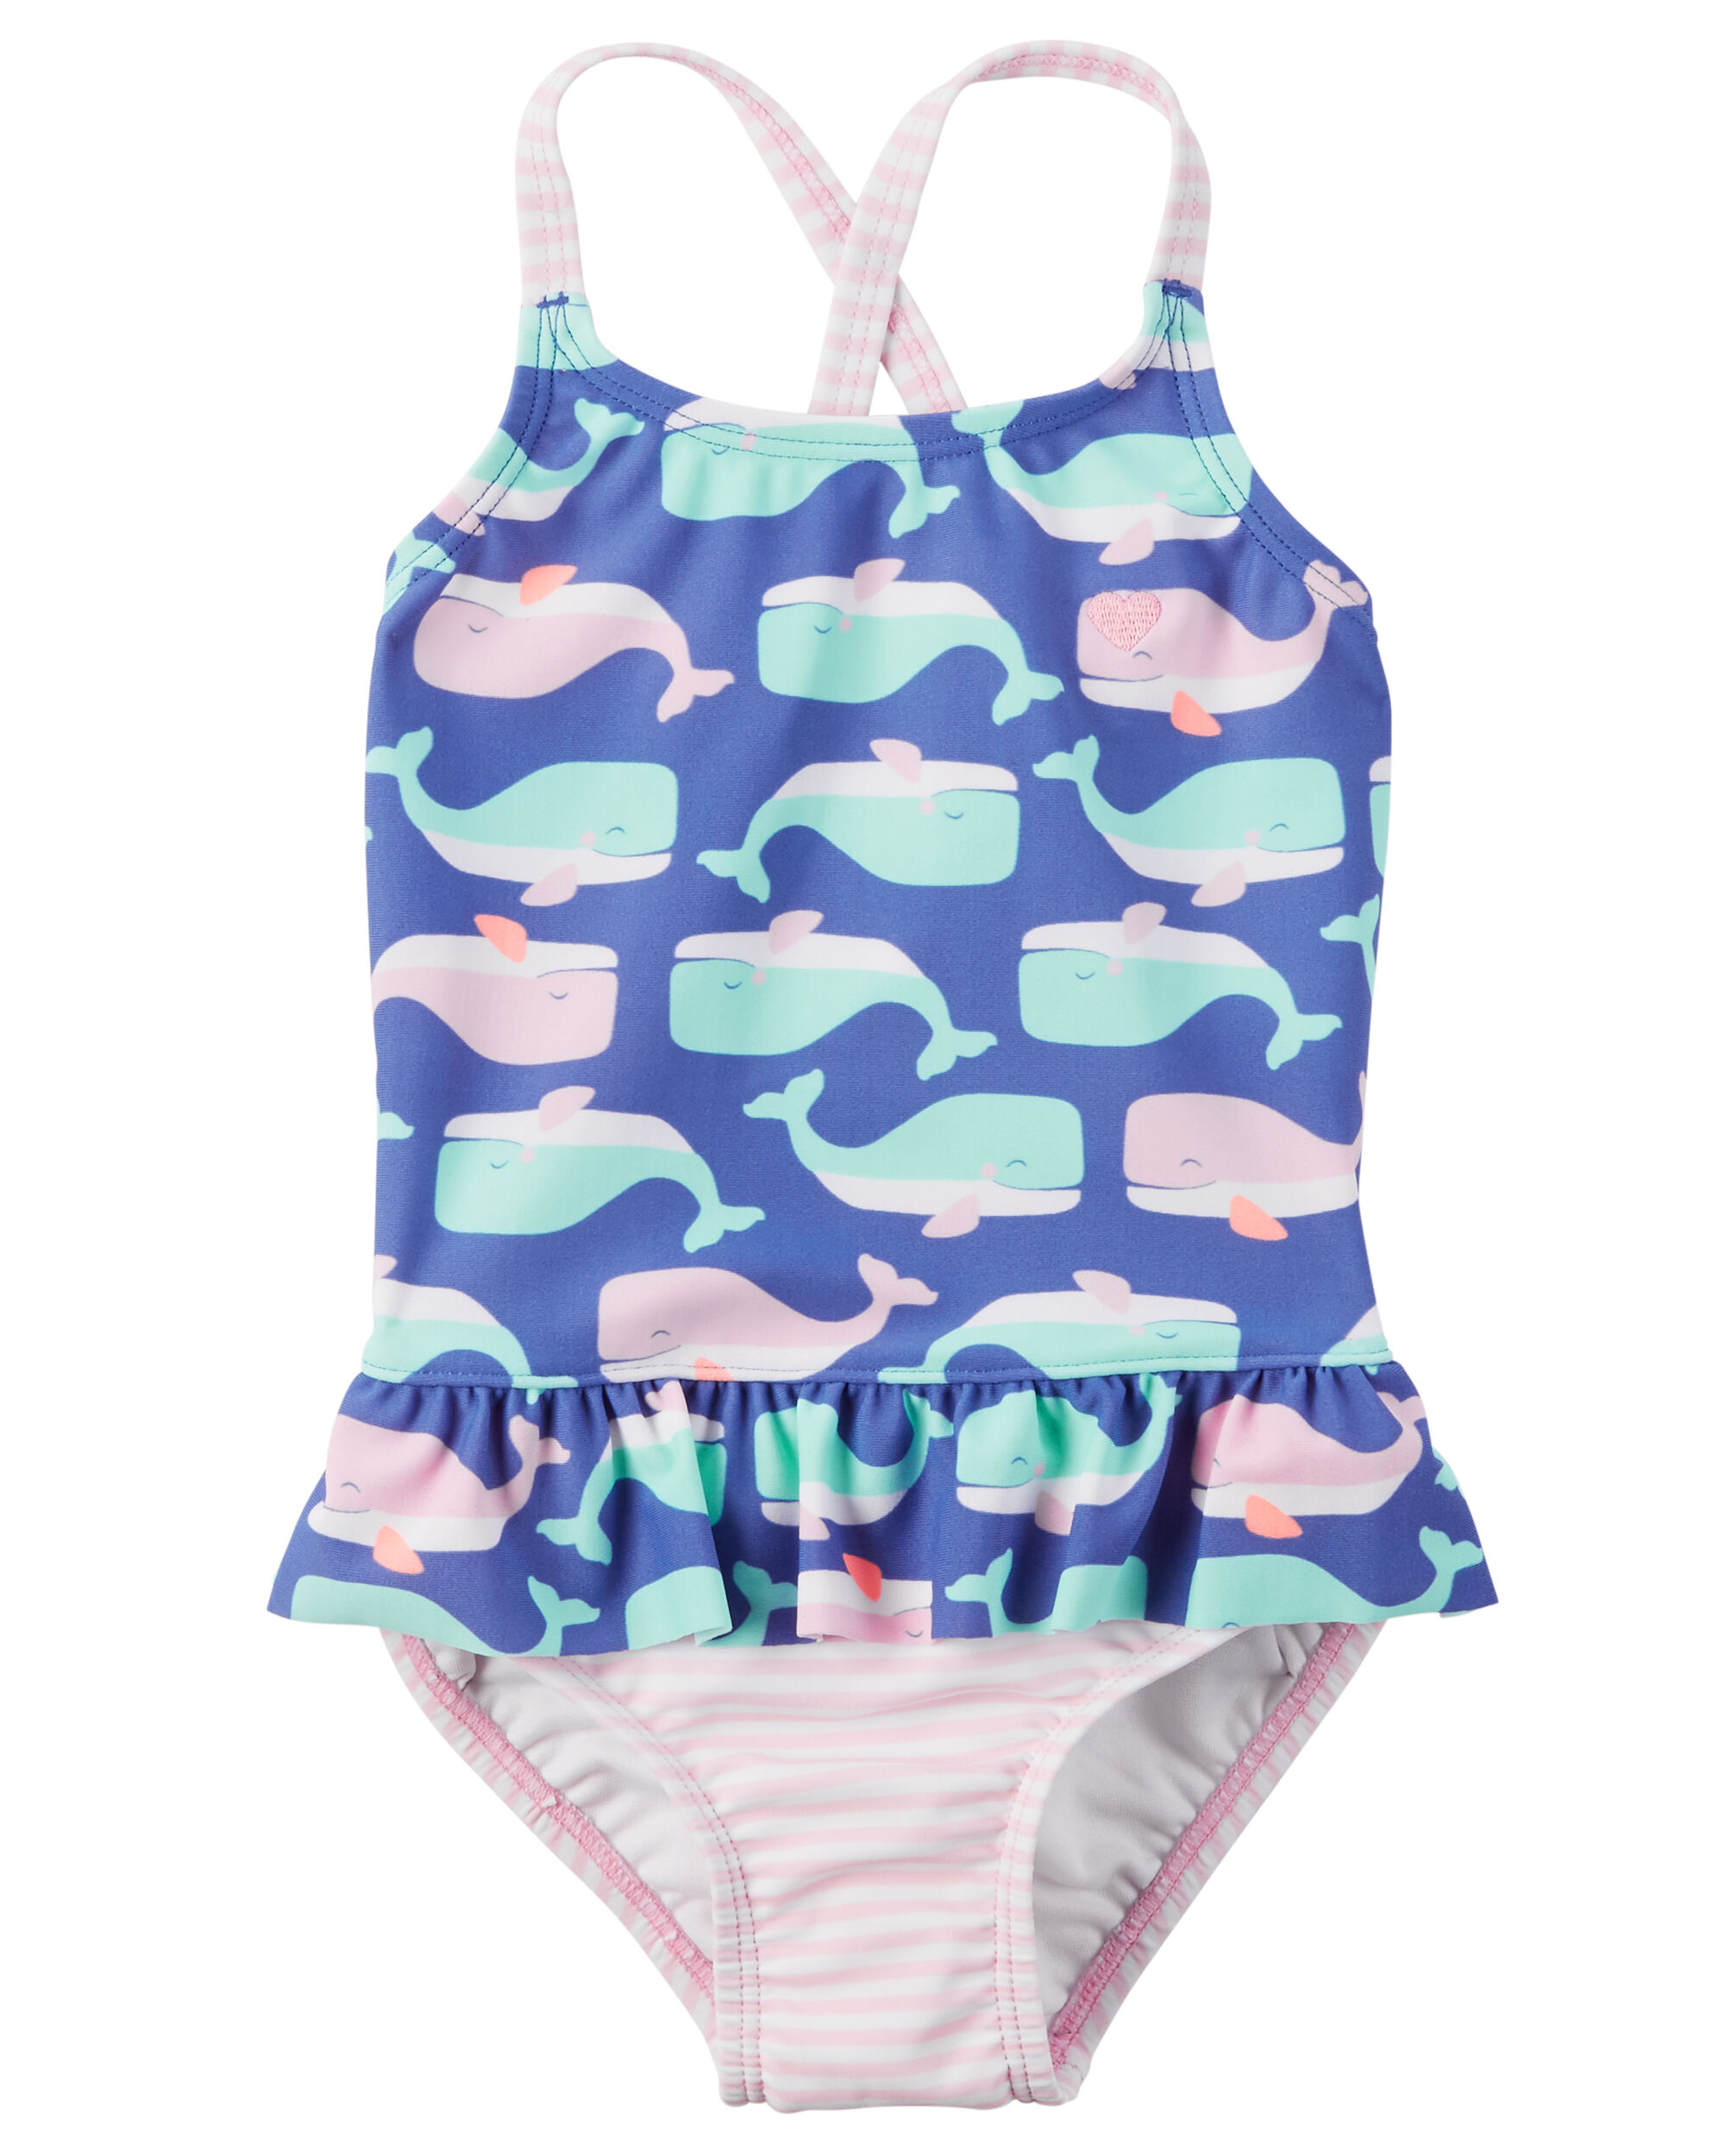 Buy Swimwear for Girls Online